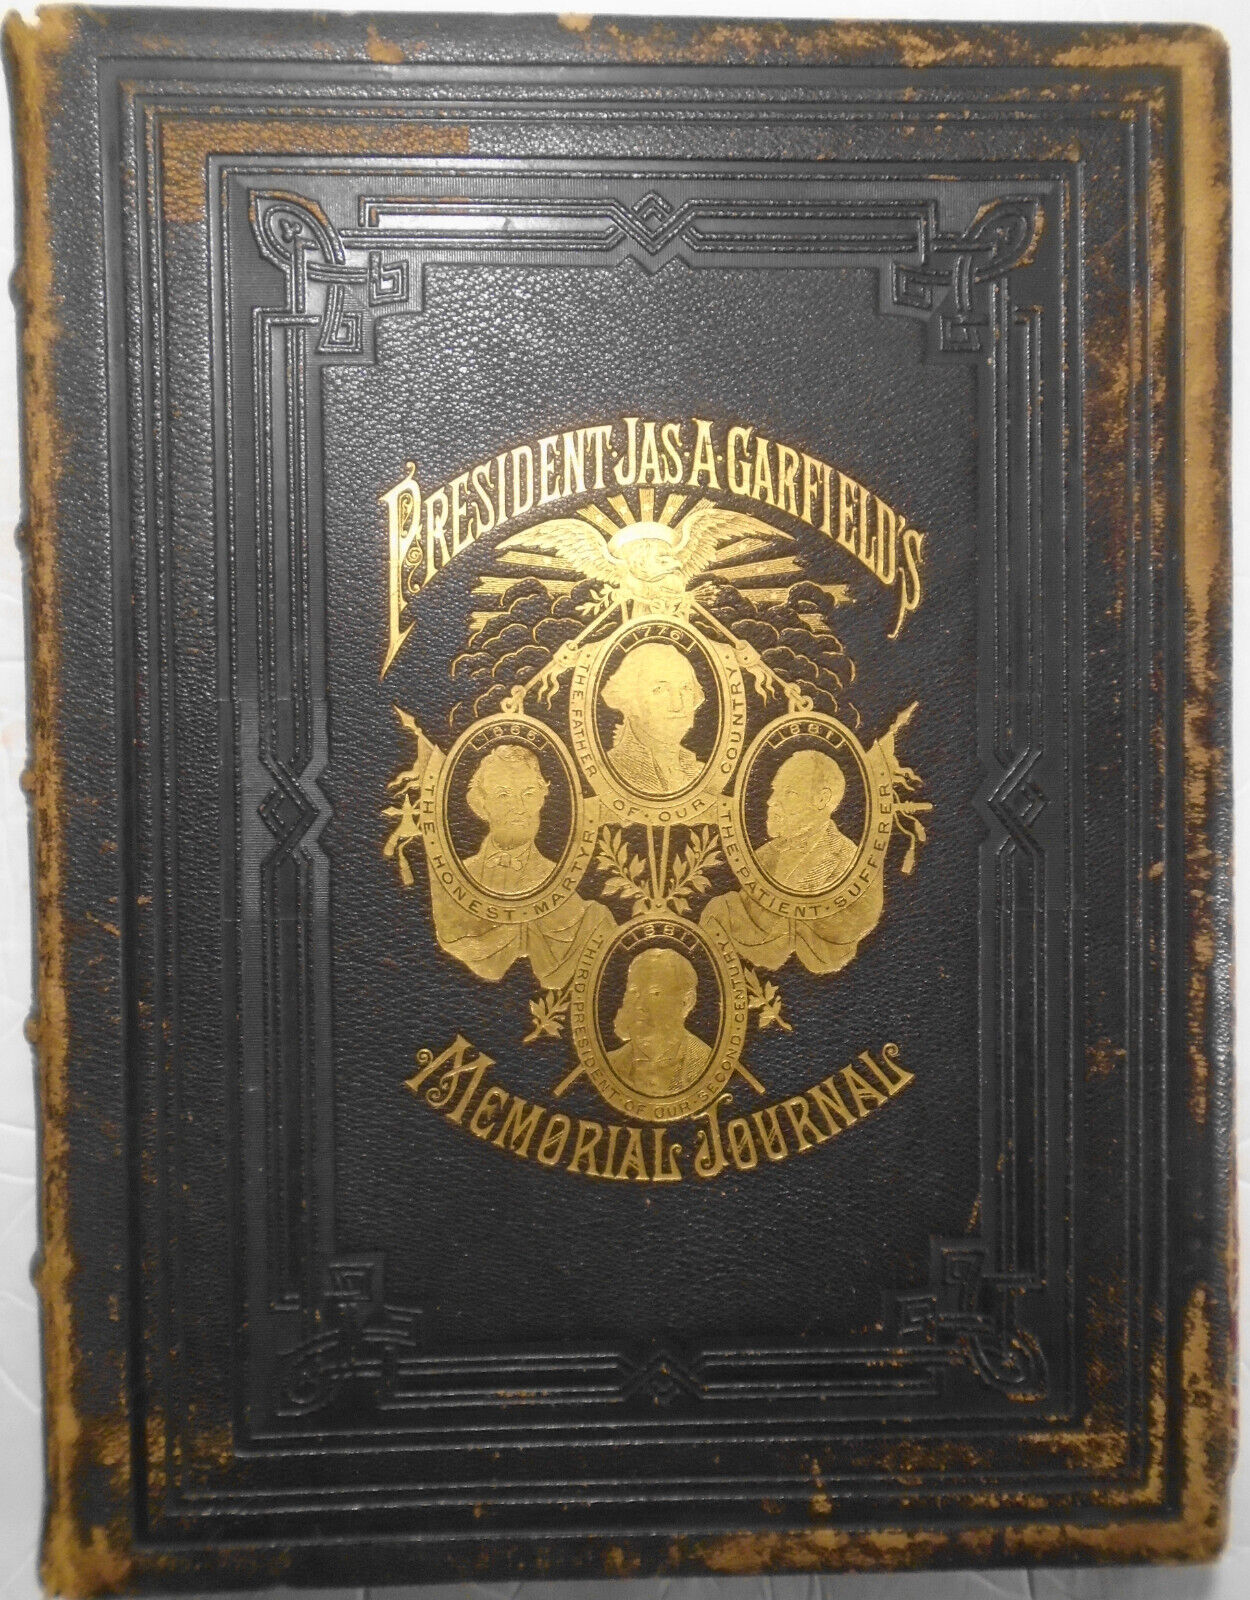 1882 President James A Garfield's Memorial Journal by Clara F Deihm. 1st edition